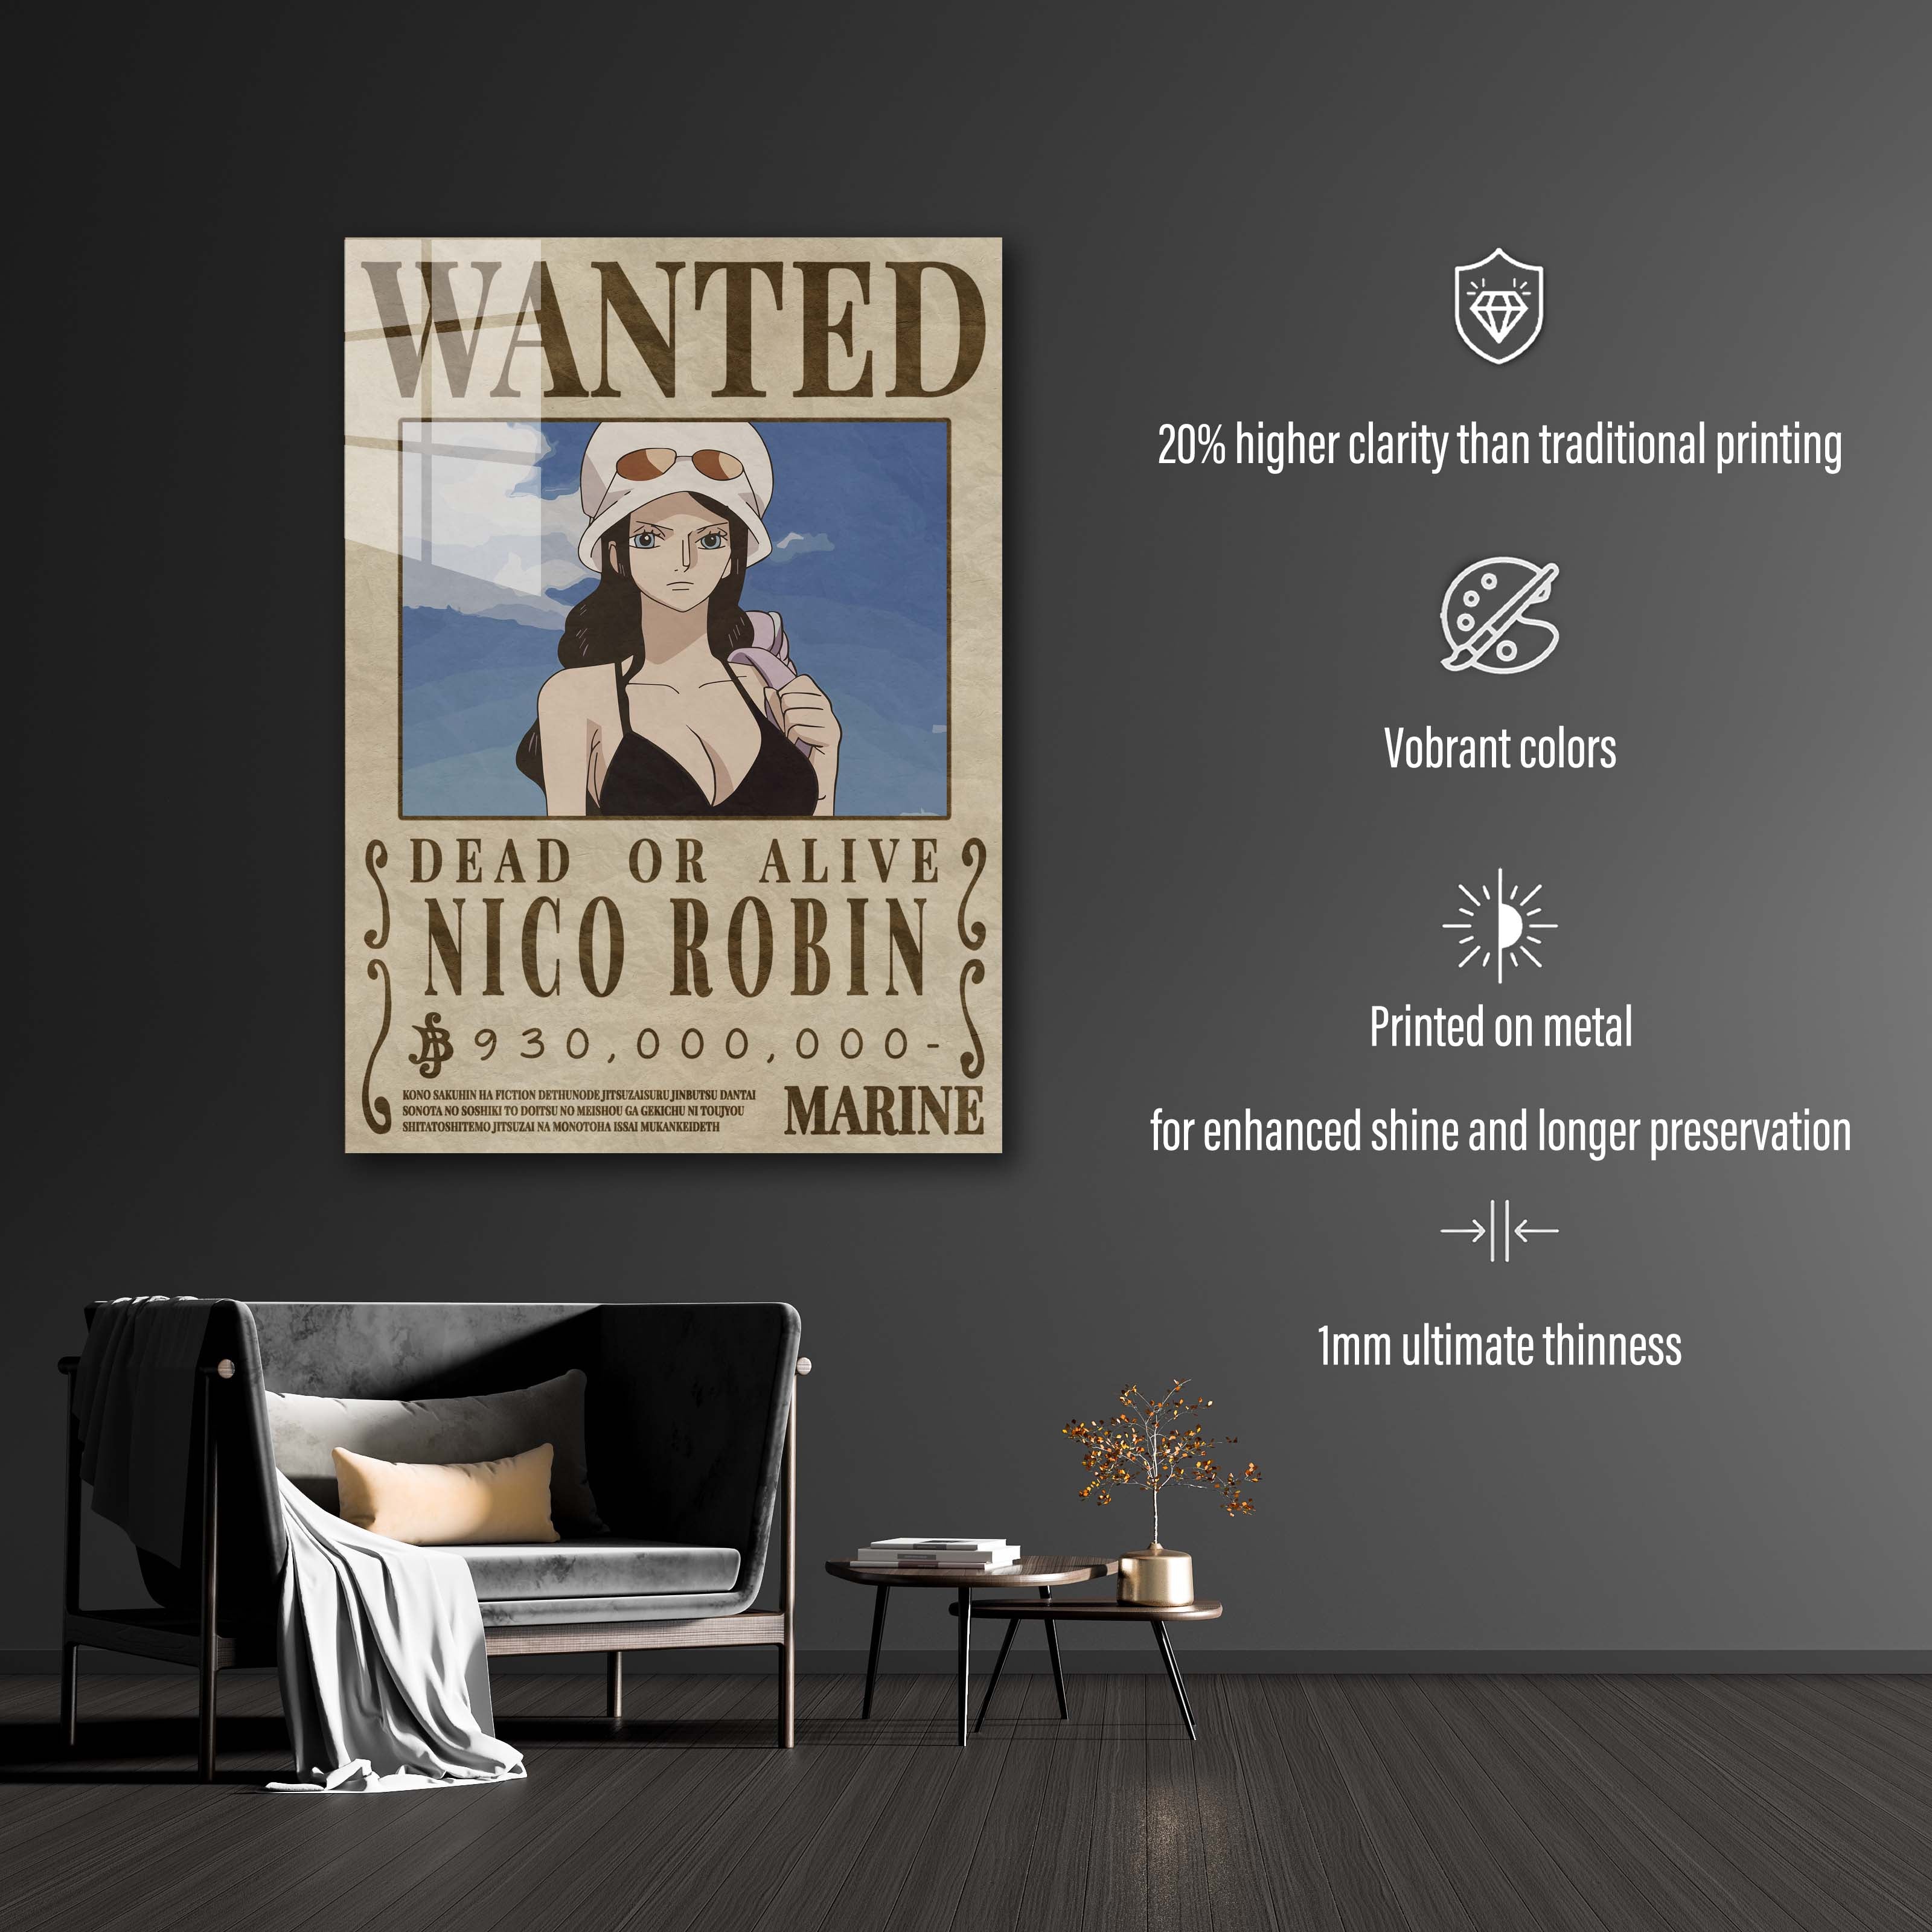 Nico Robin-designed by @Fluency Room